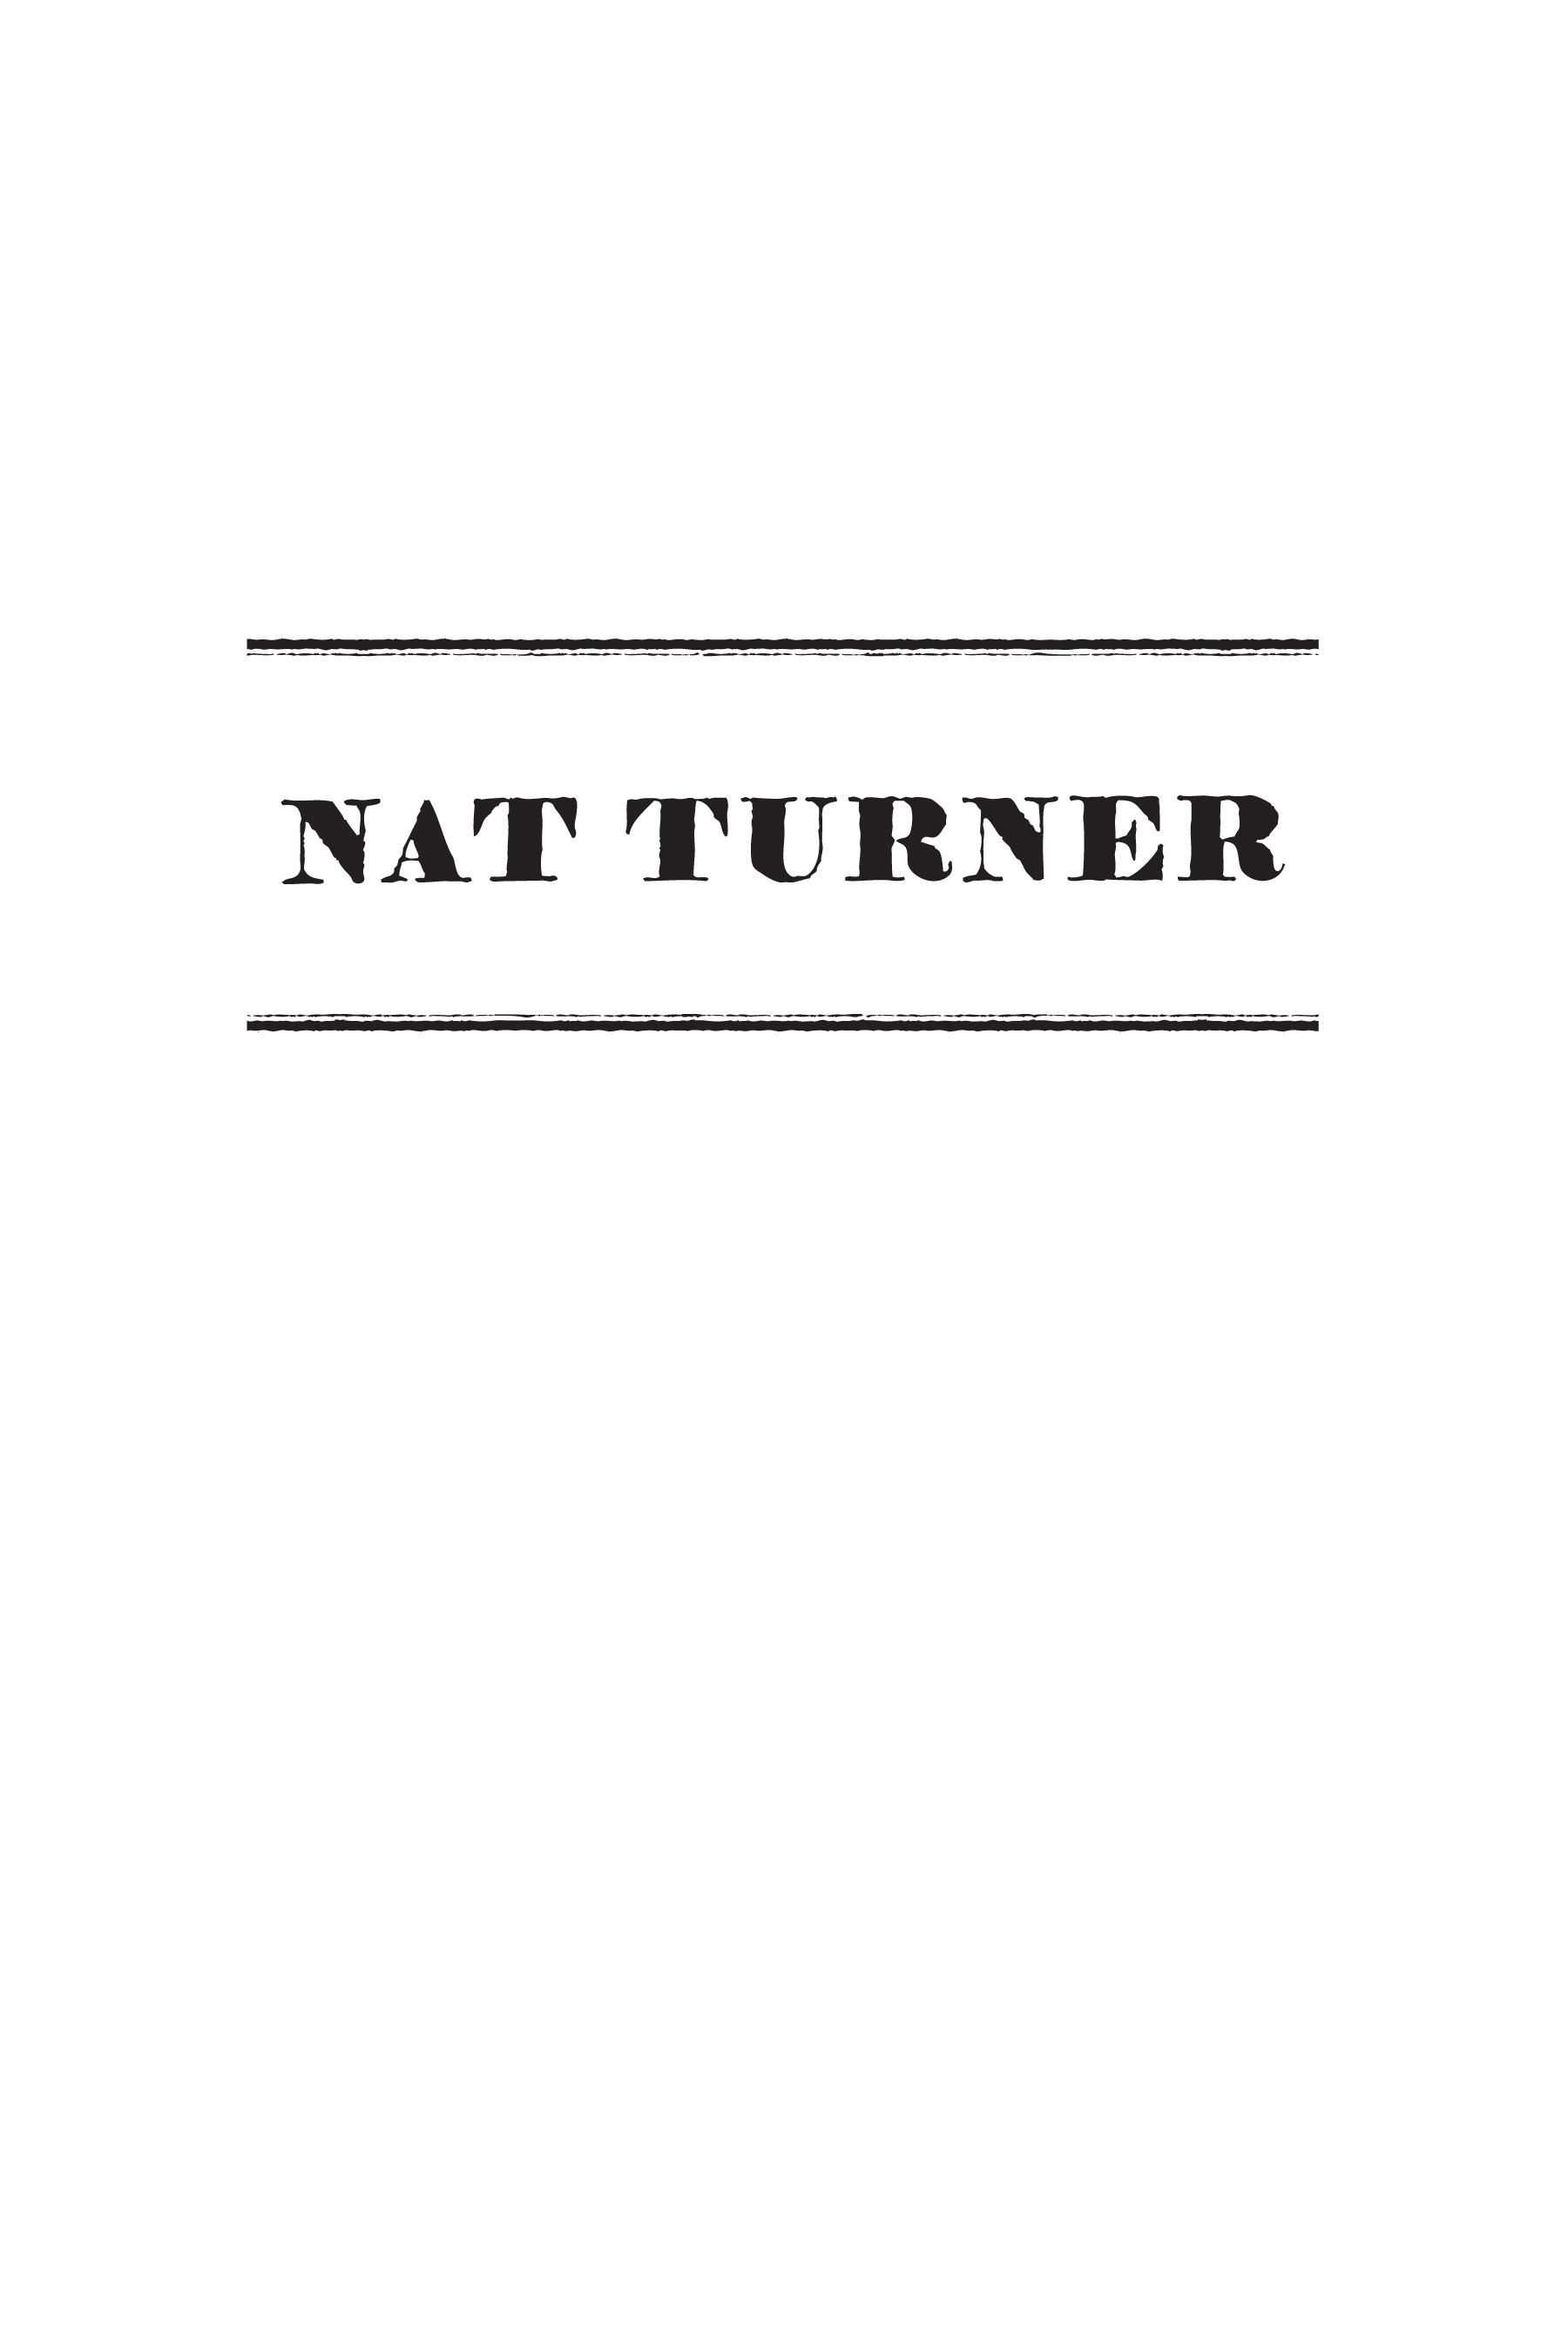 Read online Nat Turner comic -  Issue # TPB (Part 1) - 4